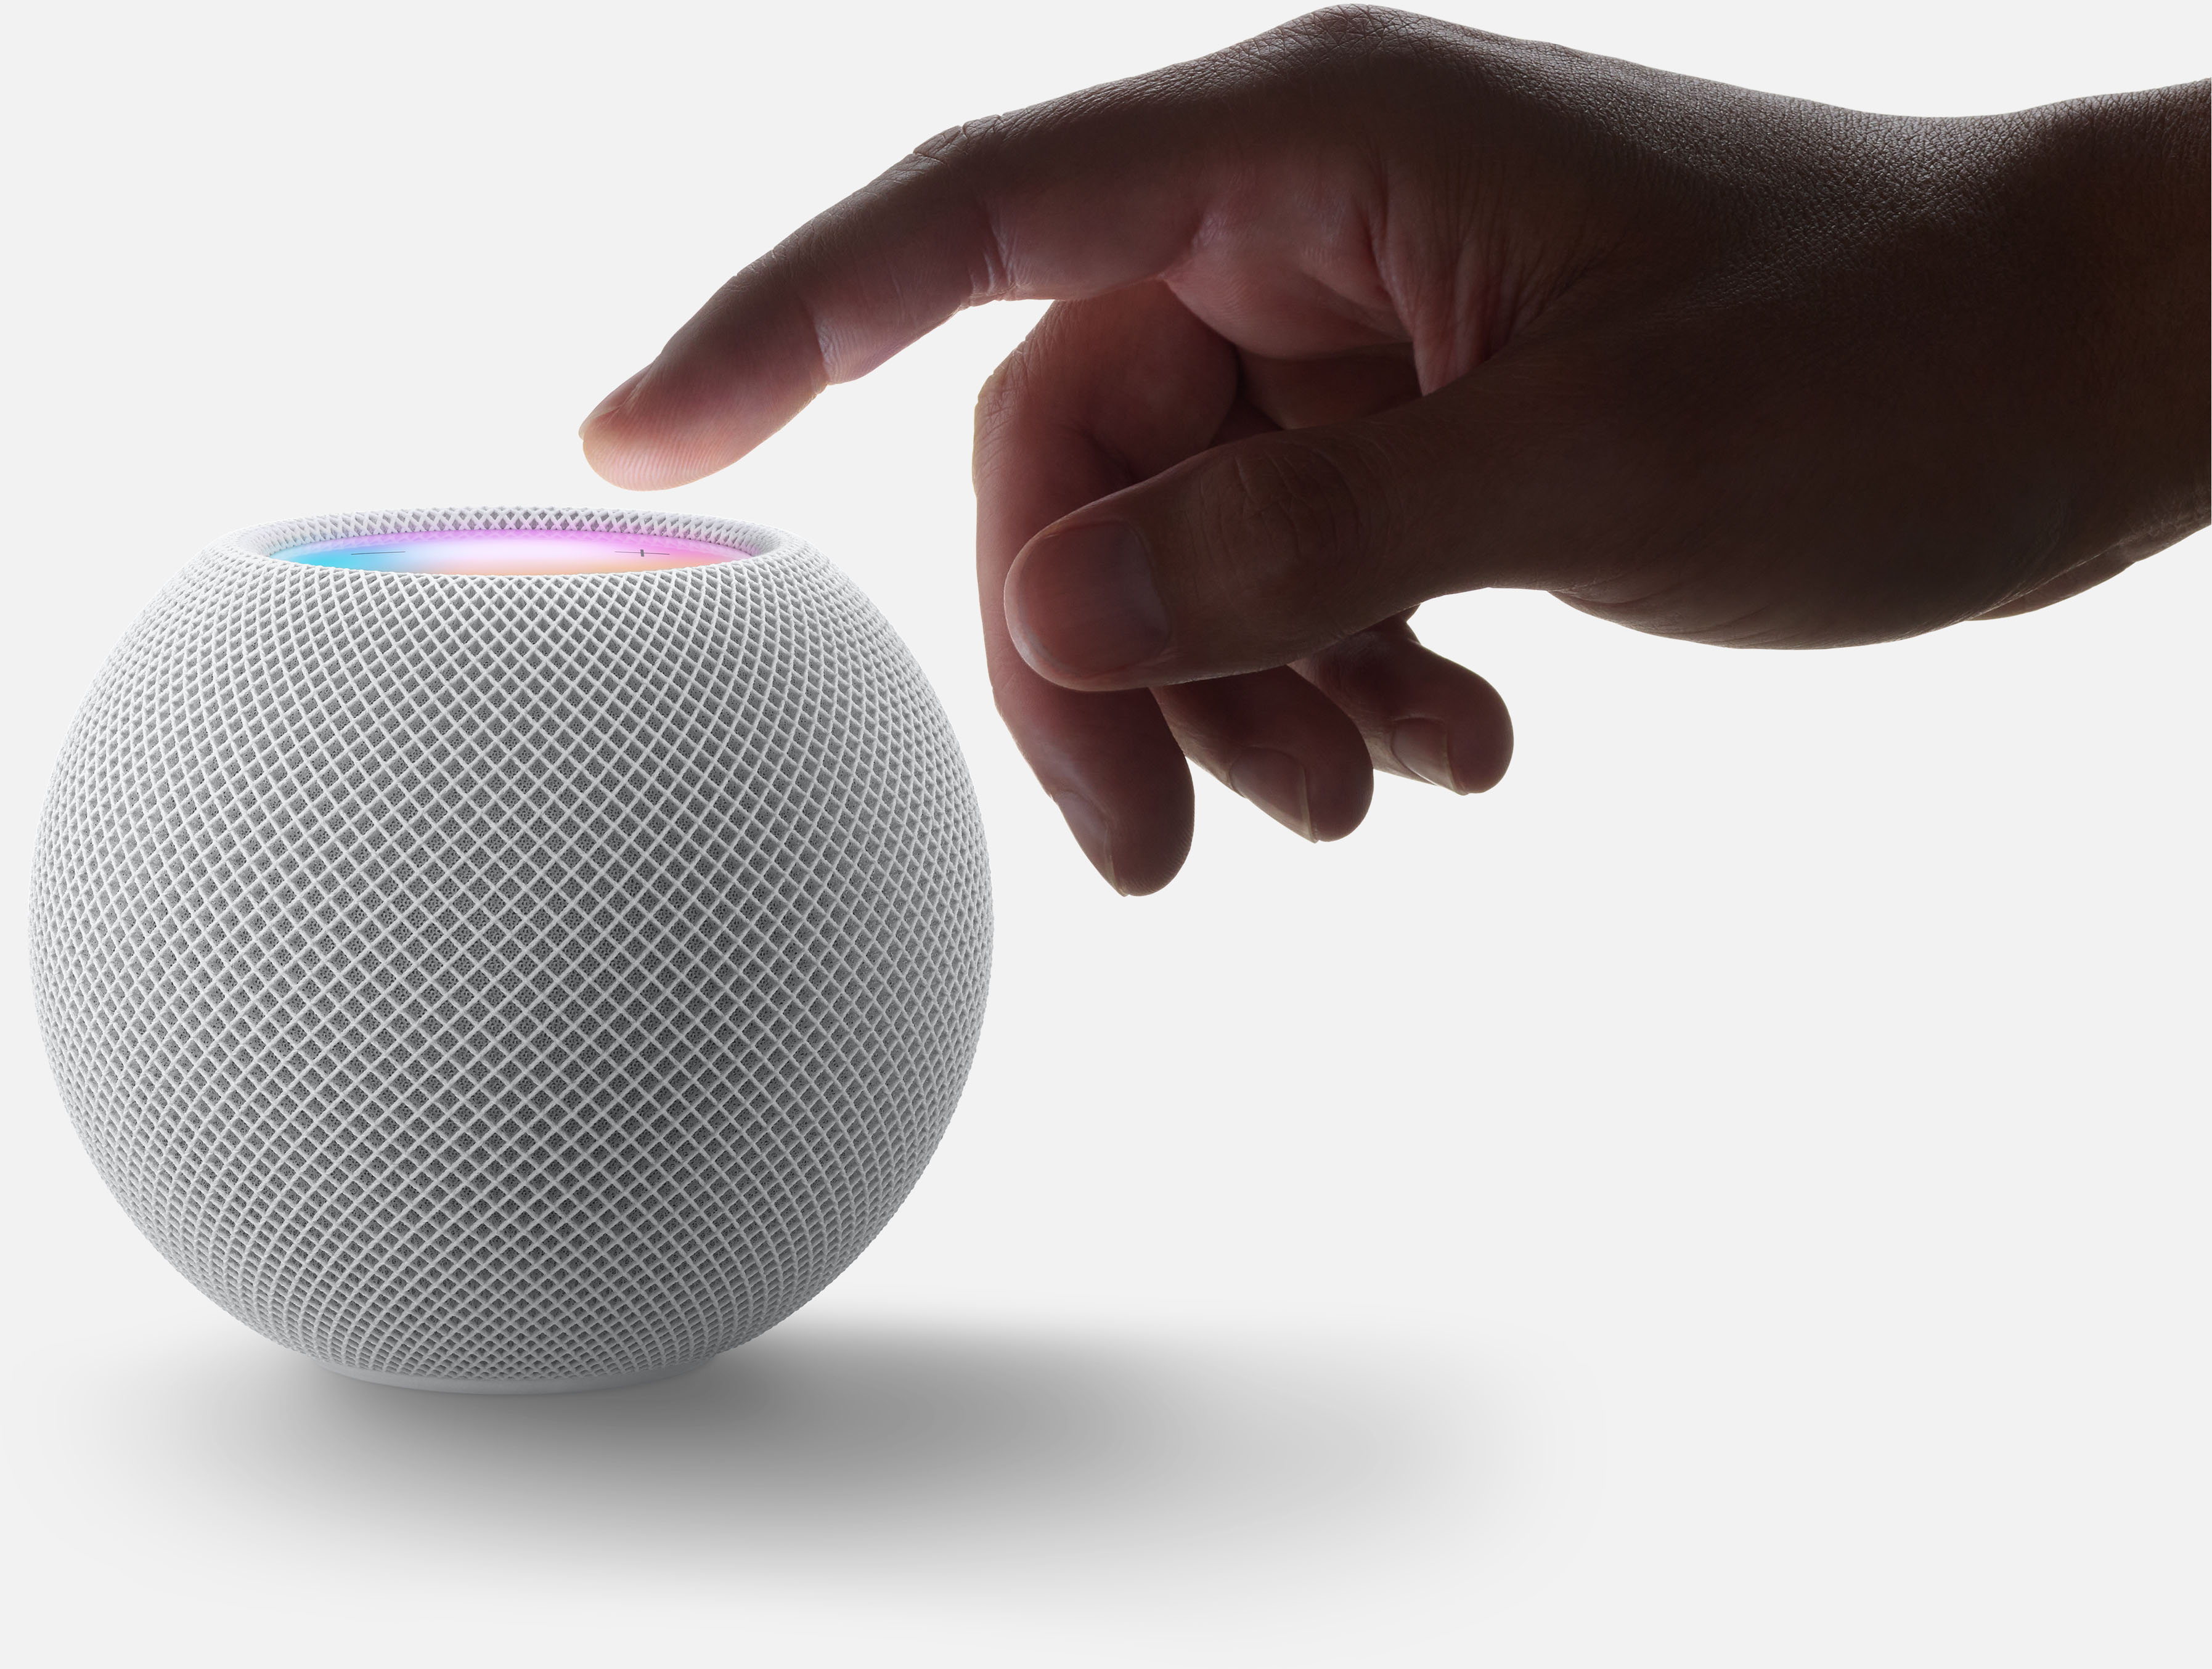 HomePod Mini review: The smart speaker for Apple users